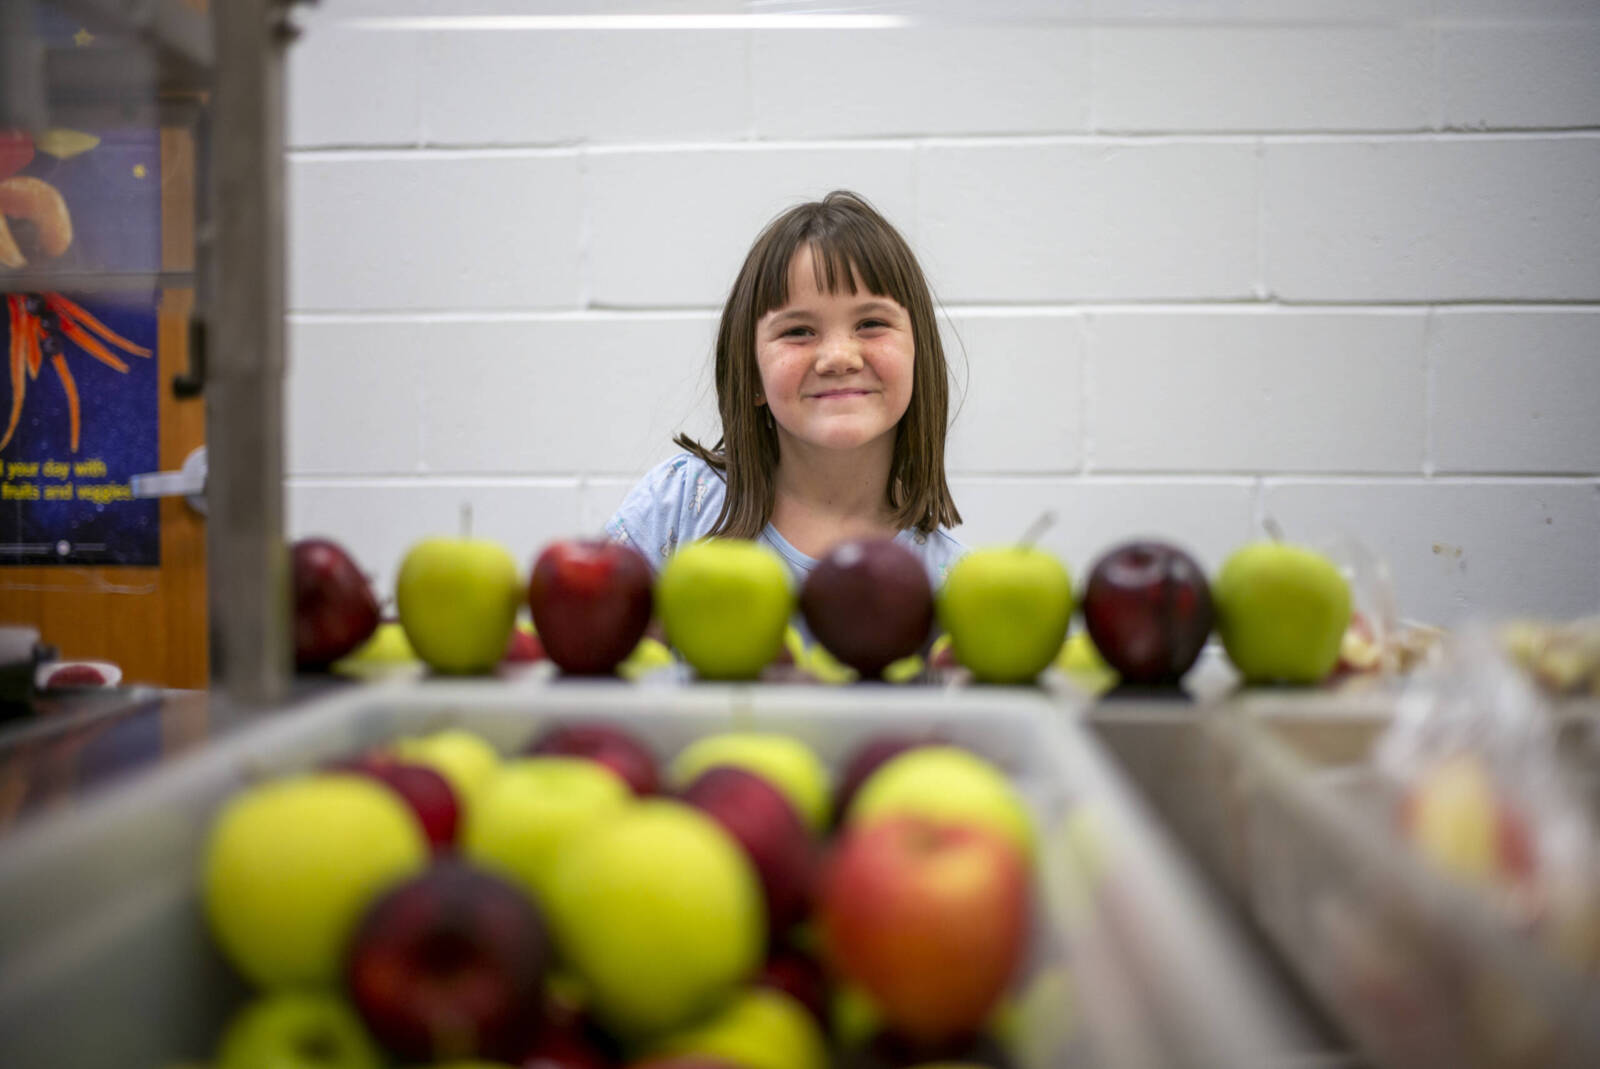 Girl smiling over apples